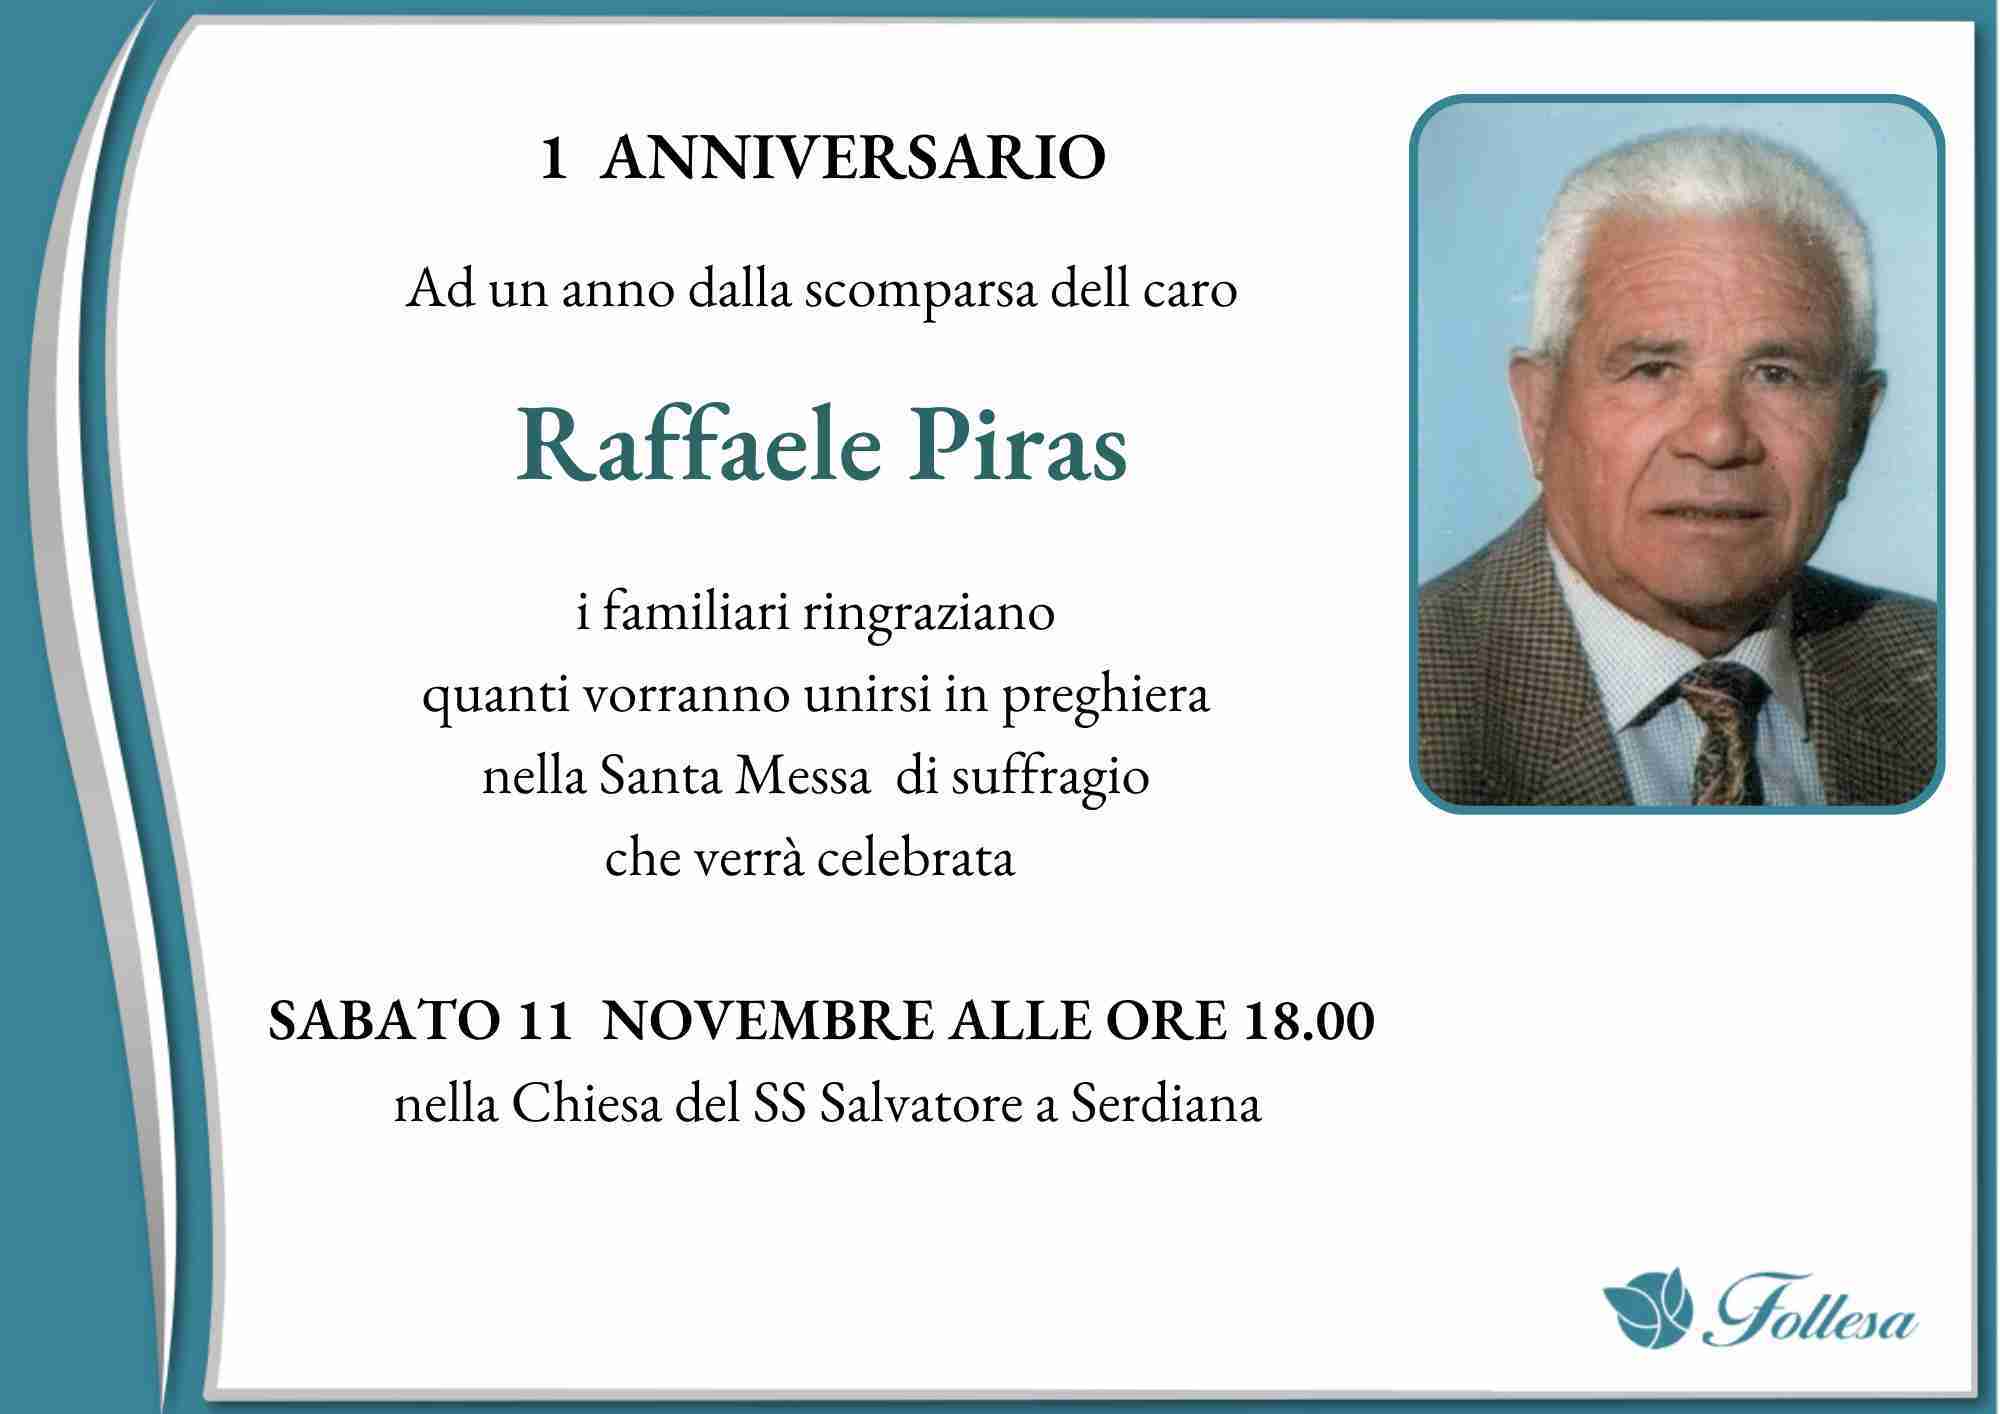 Raffaele Piras